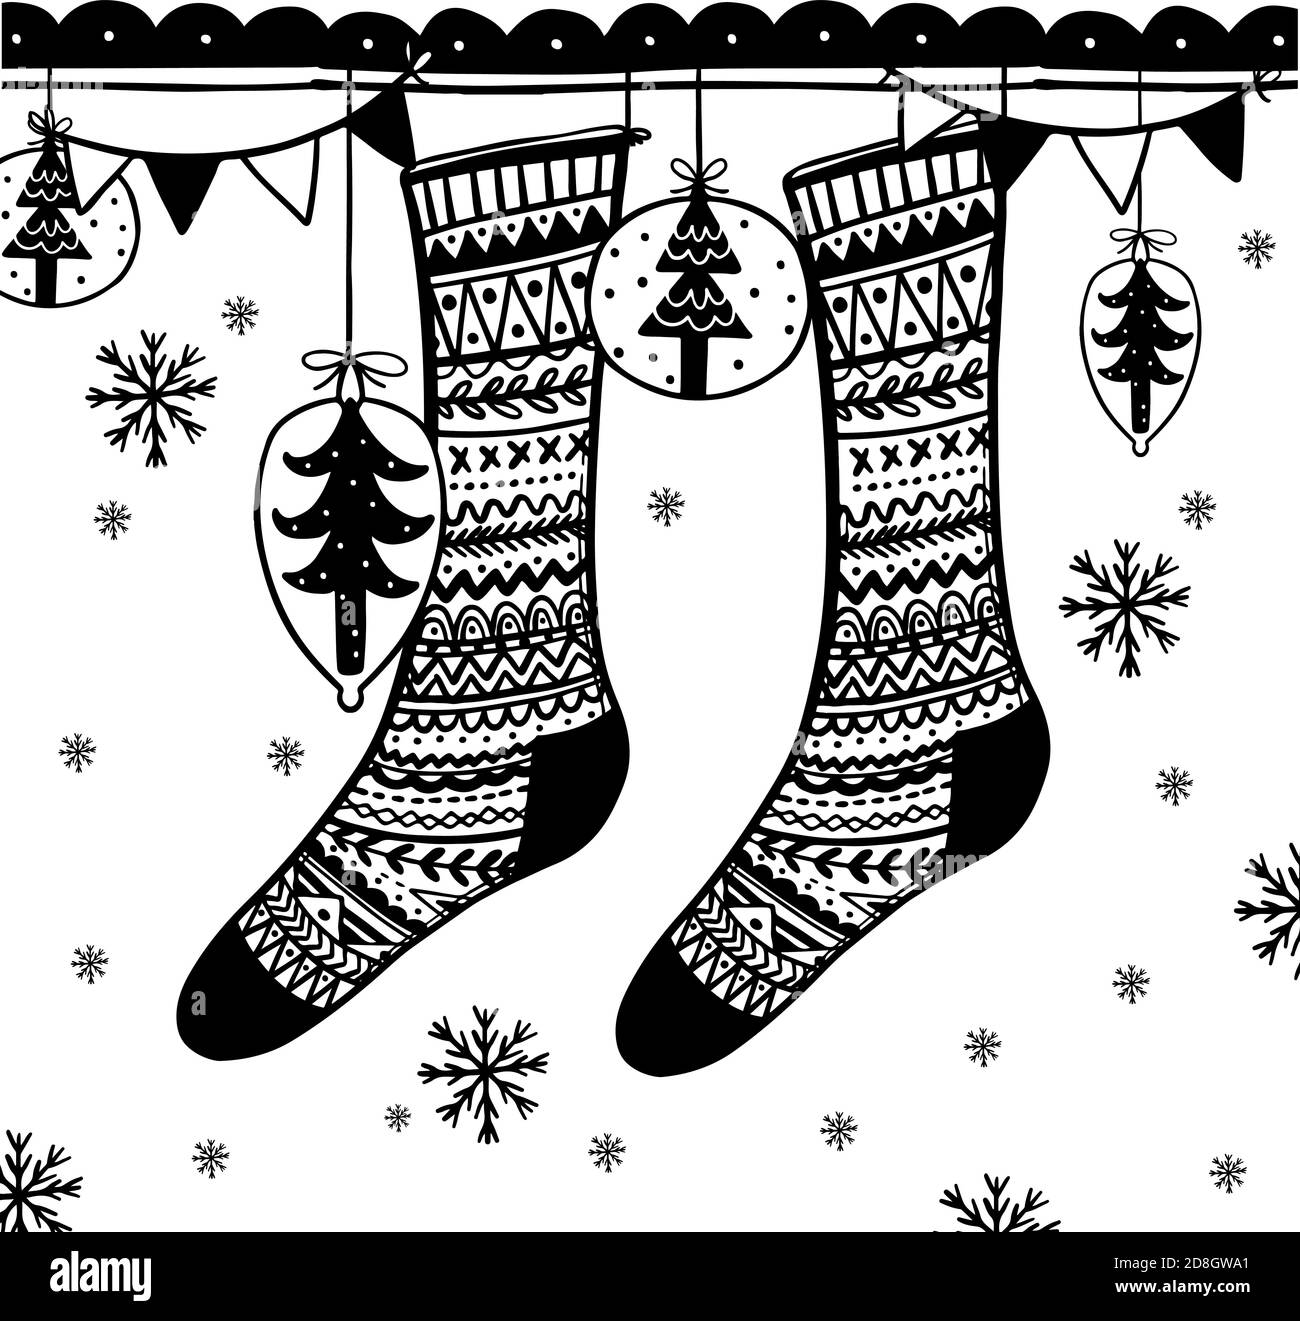 Cute Christmas doodles Stock Vector Image & Art - Alamy